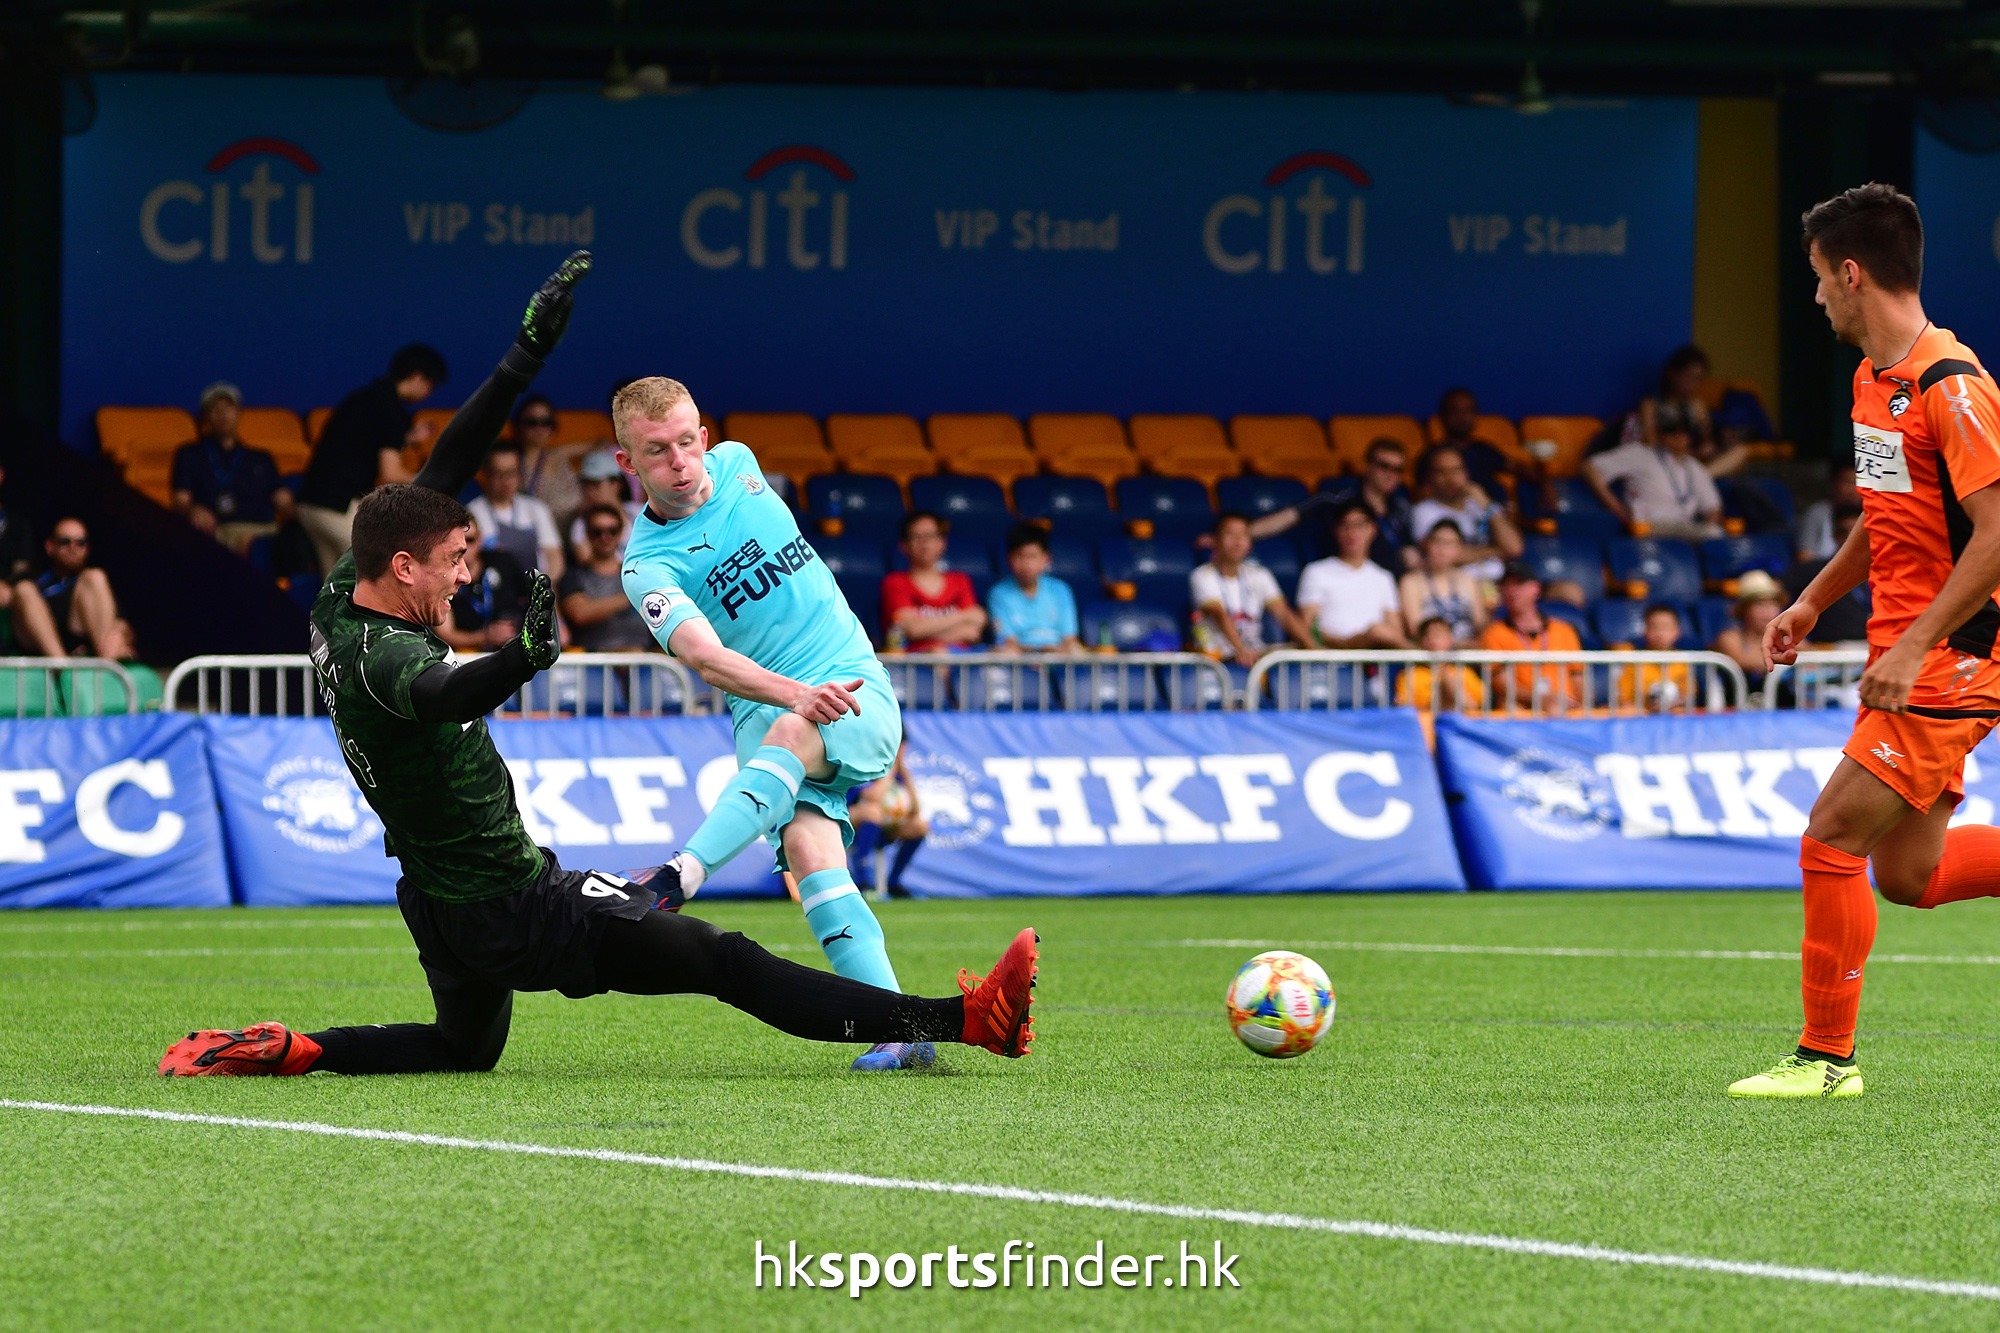 2019-05-17/19 HKFC Citi Soccer Sevens 2019 — HKSportsFinder